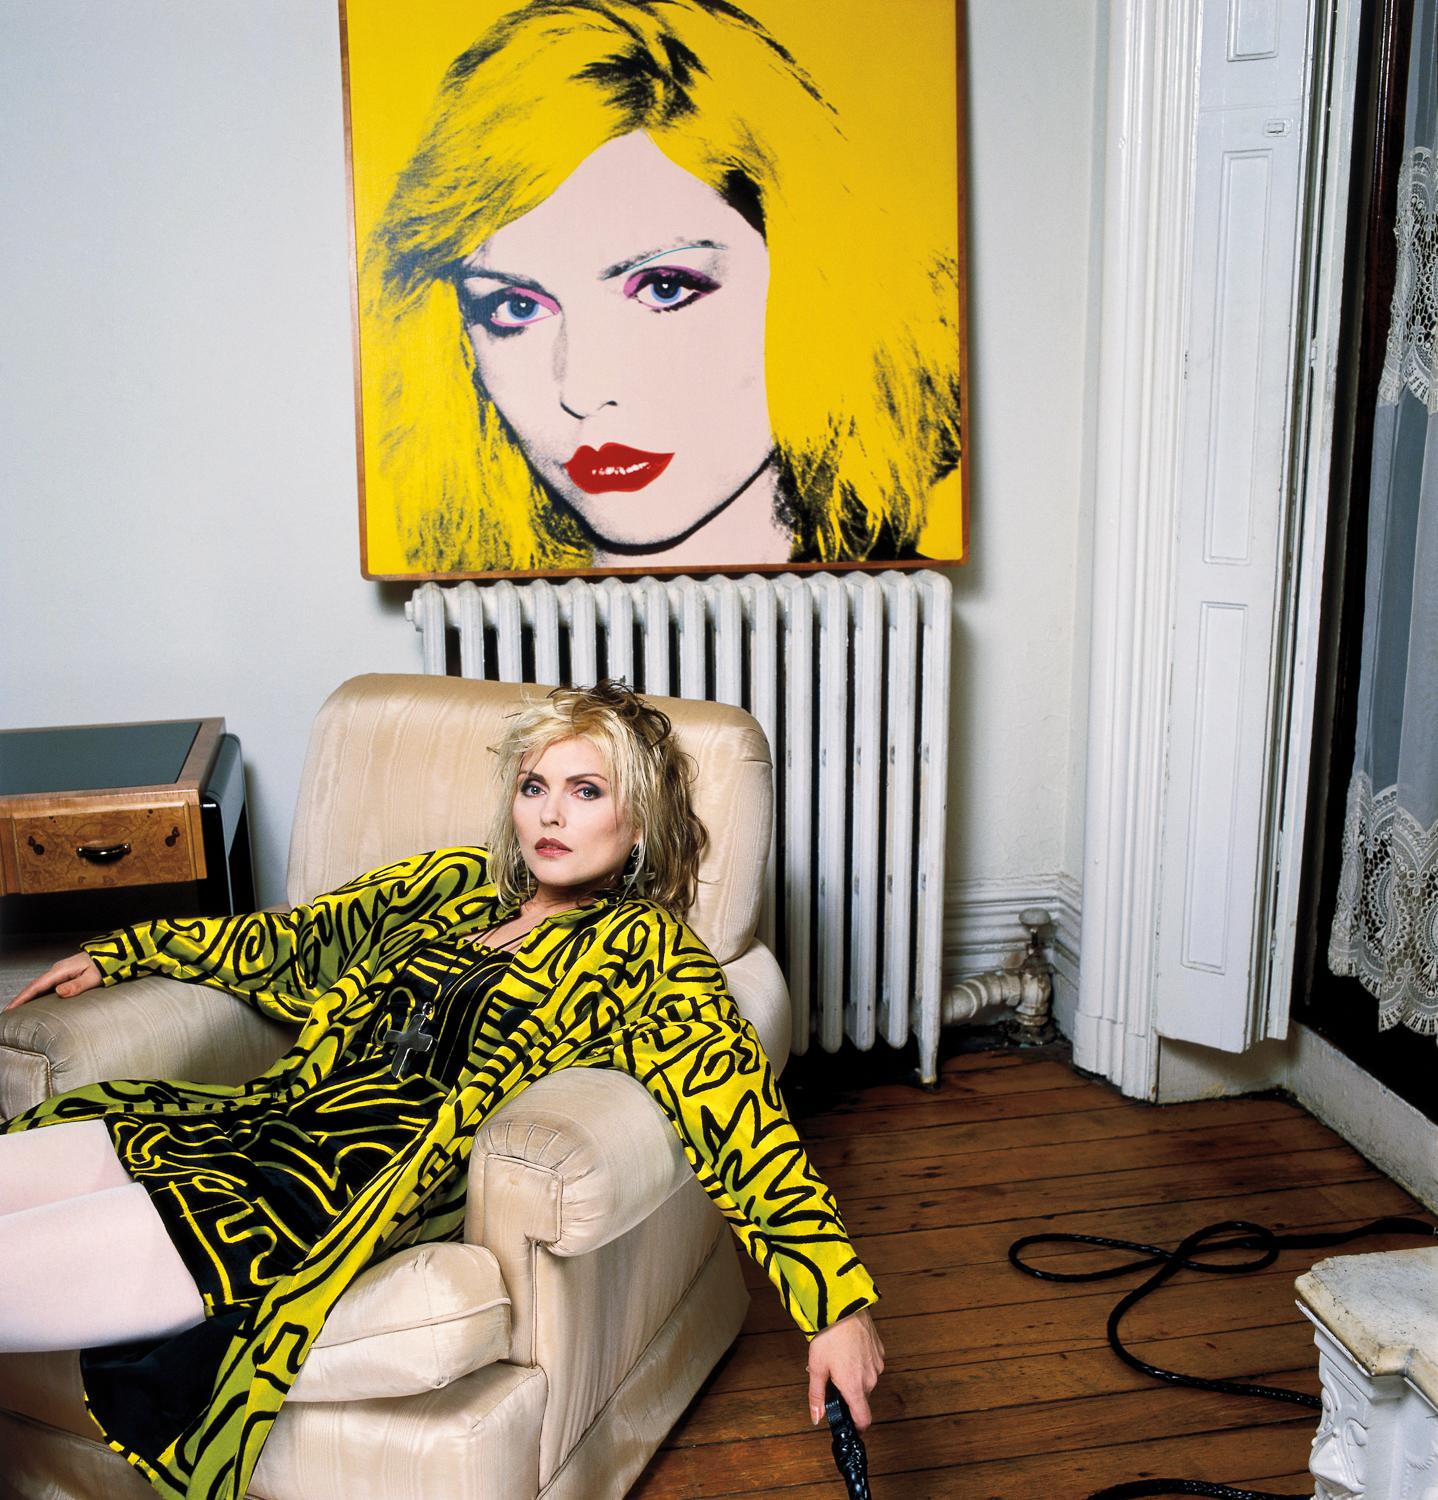 Brian Aris Portrait Photograph - Debbie Harry New York apartment